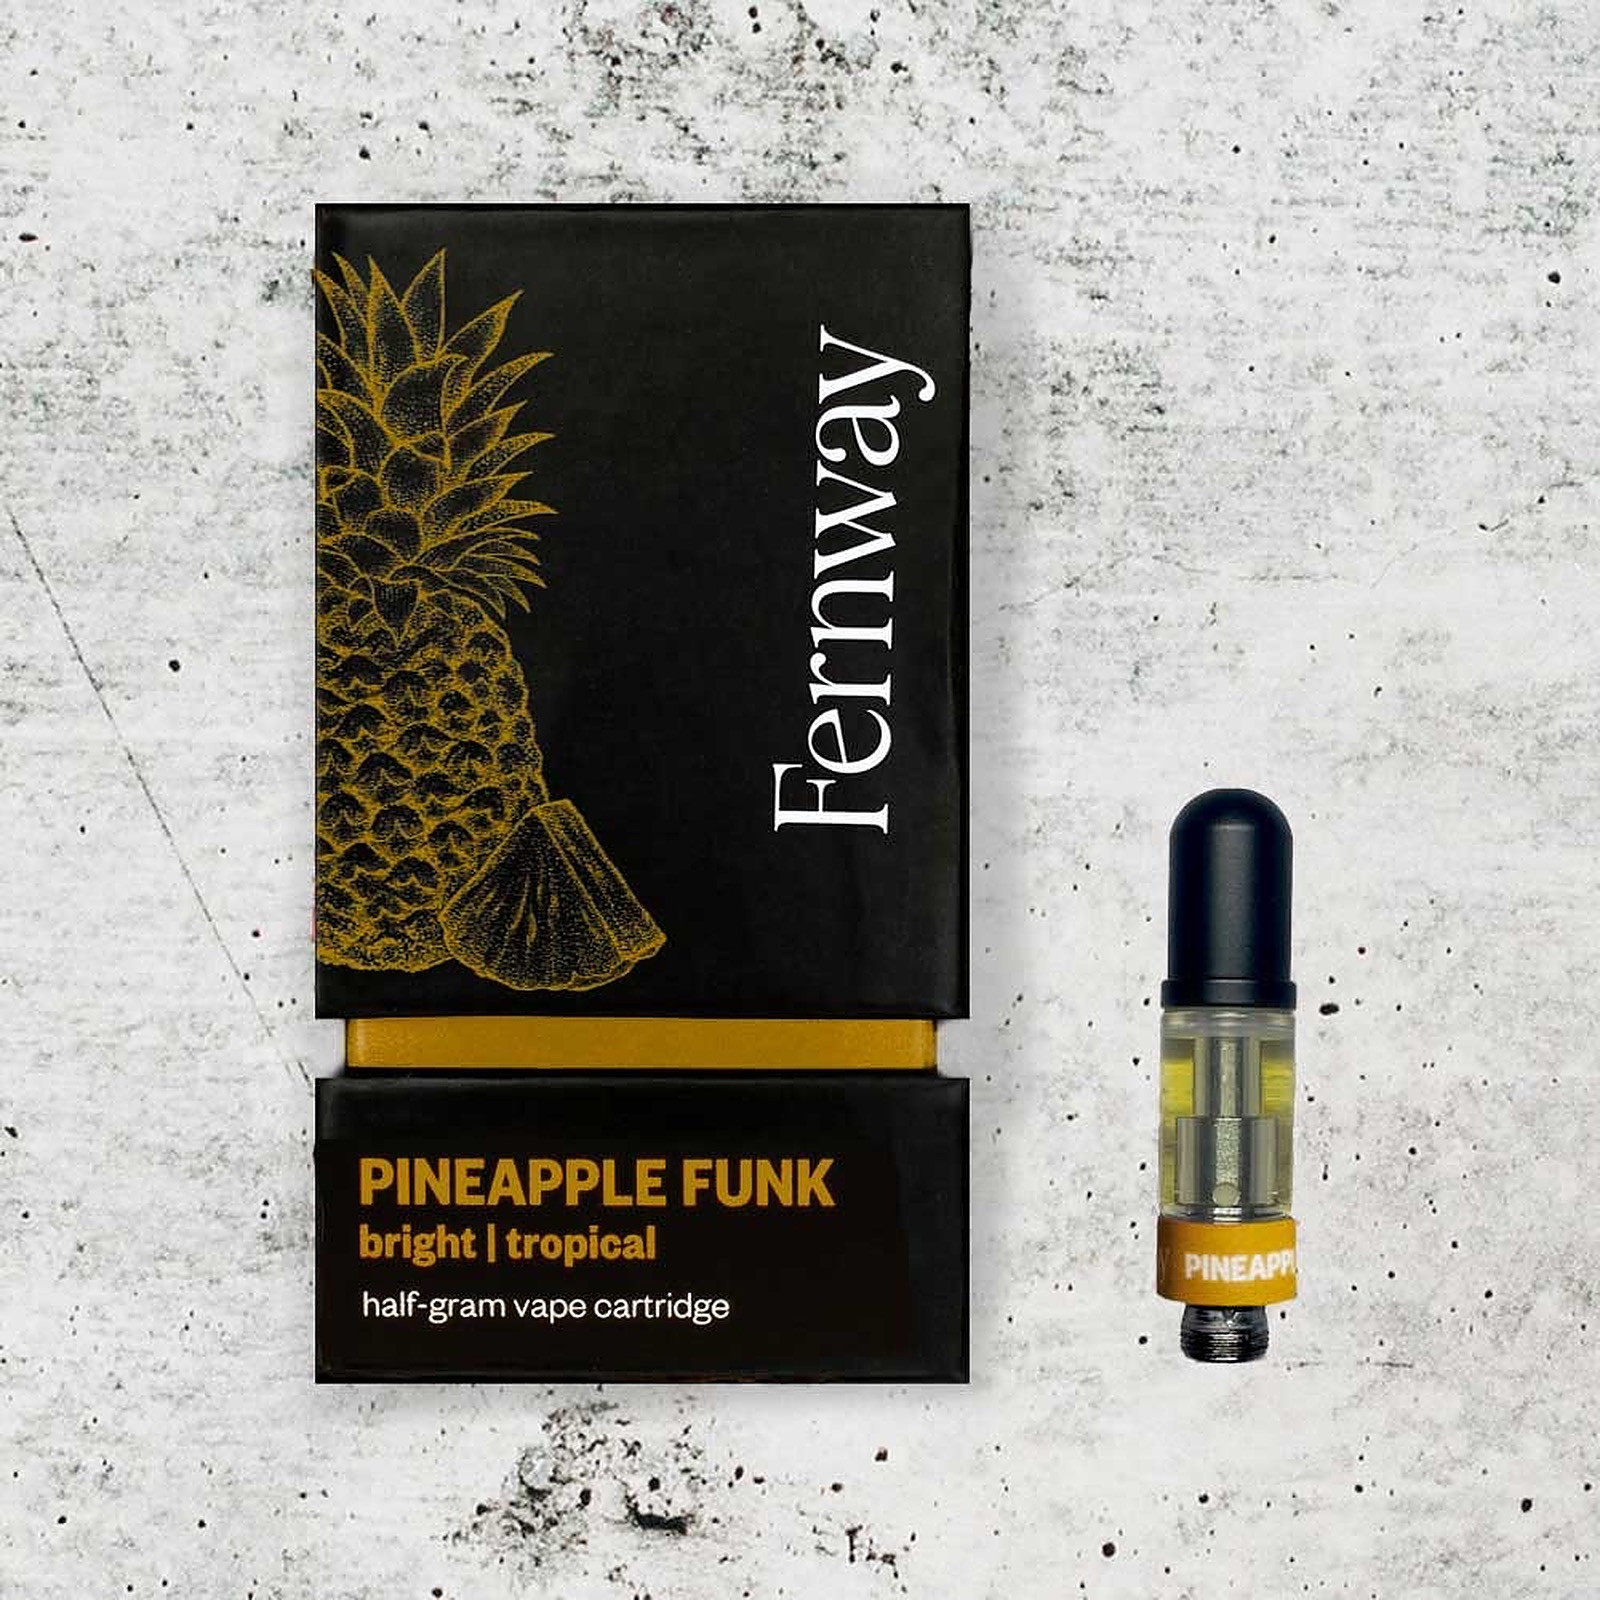 Fernway - Pineapple Funk - 0.5g Vape Cartridge (H)